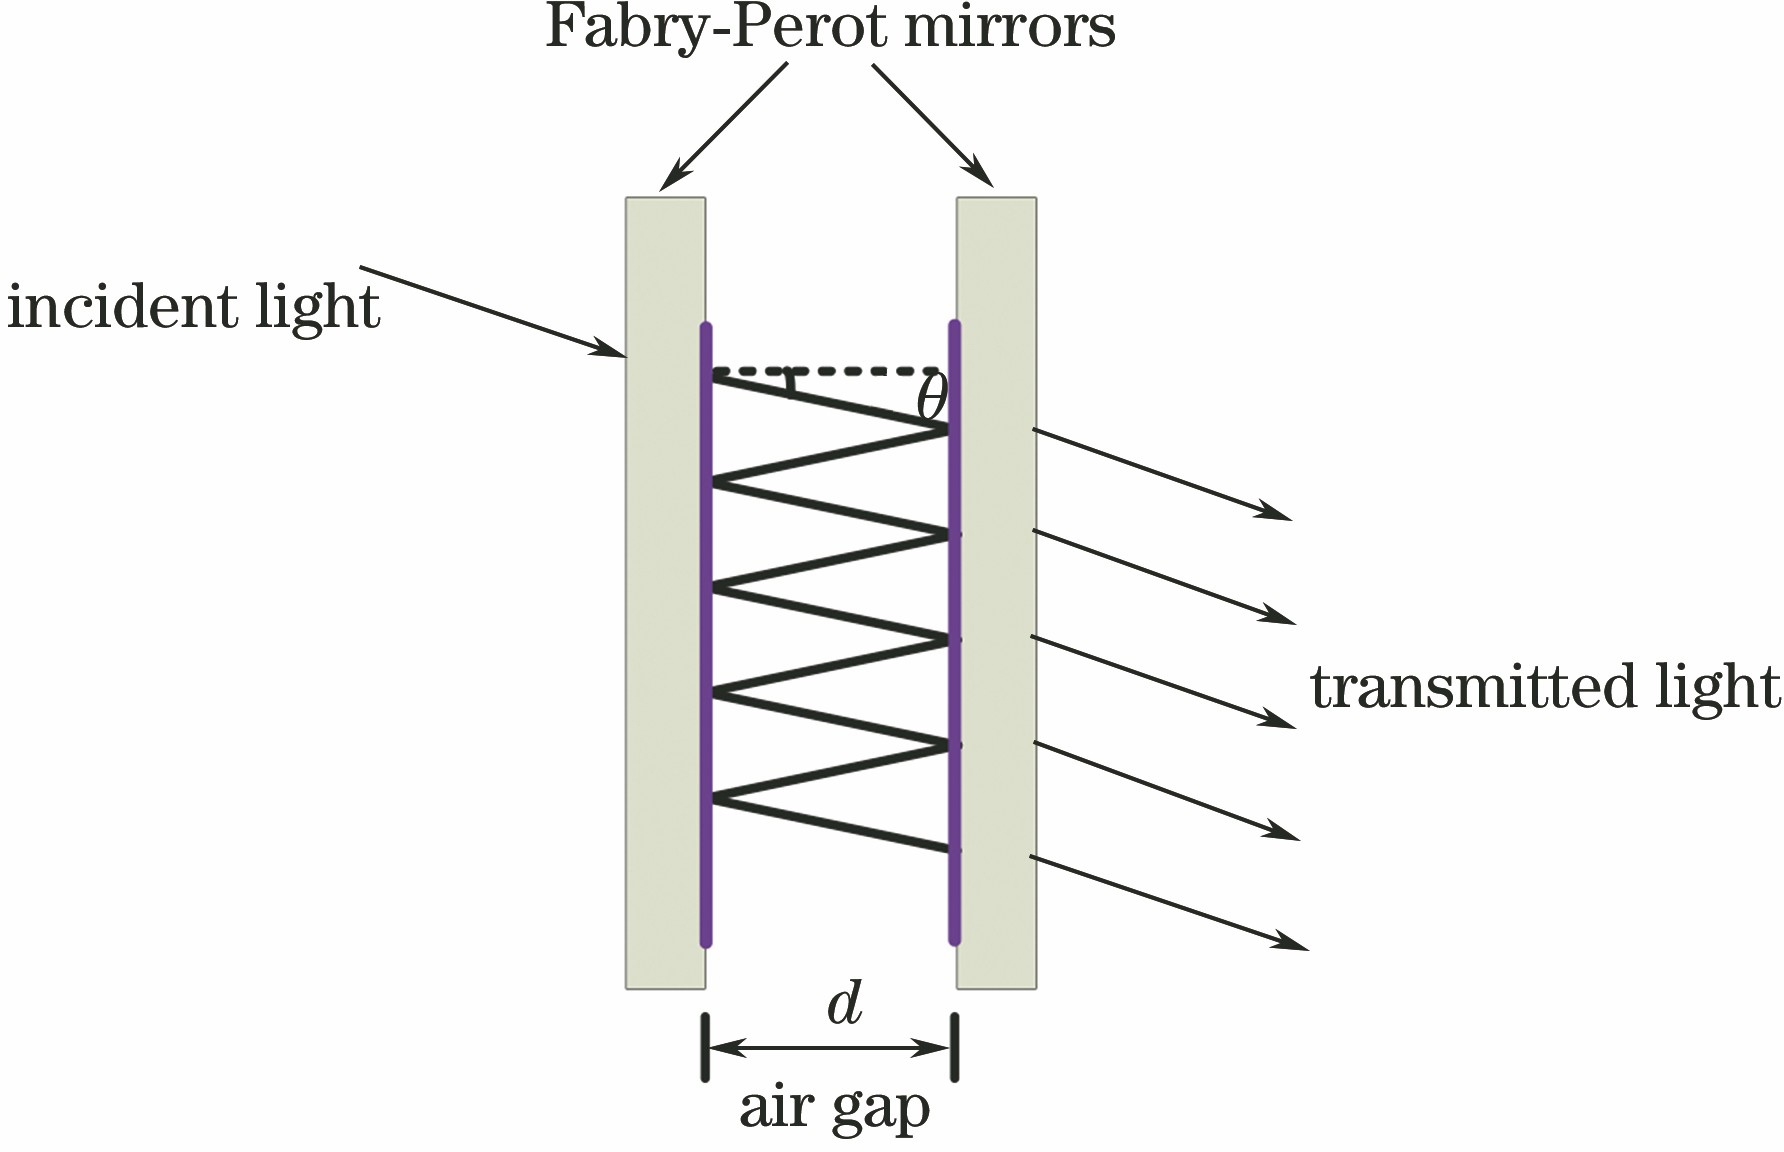 Schematic of Fabry-Perot interferometer